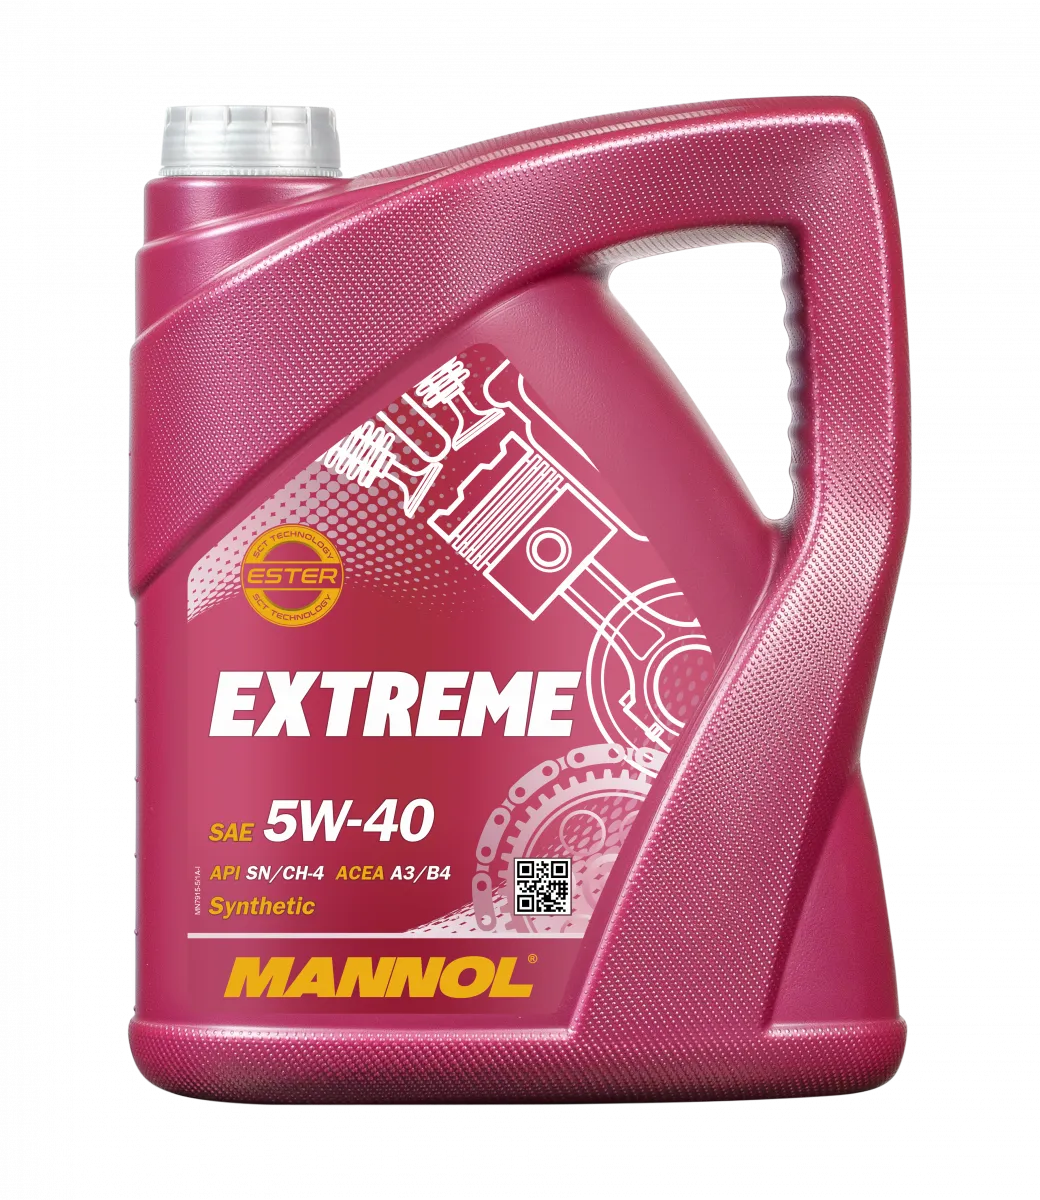 mannol extreme 5W-40#1